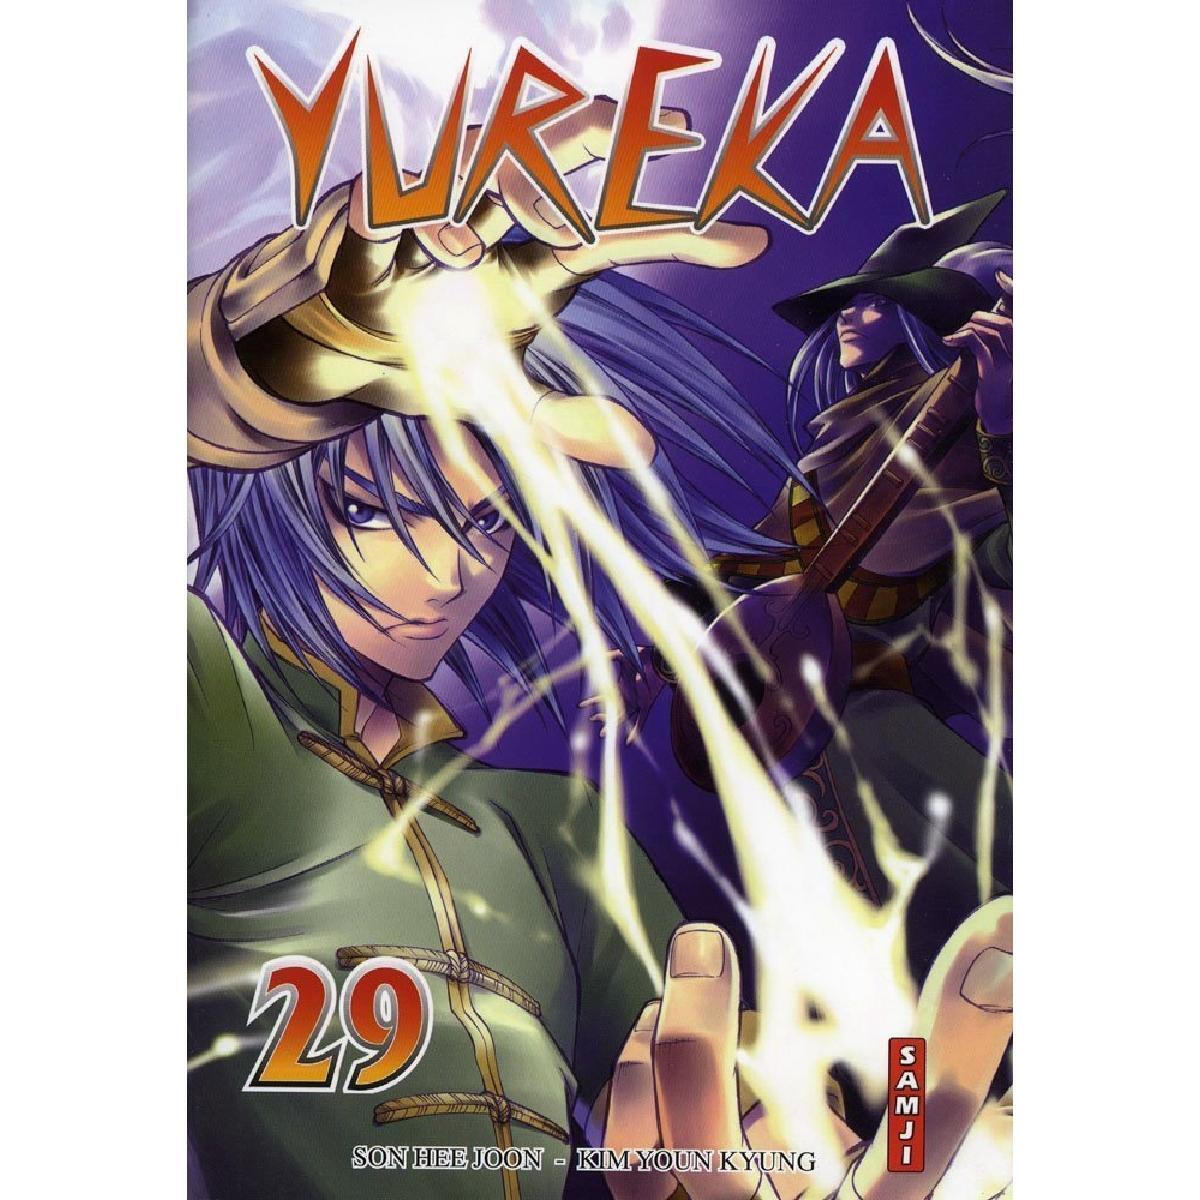 Manga Yureka Tome 29 - Editions Tokebi